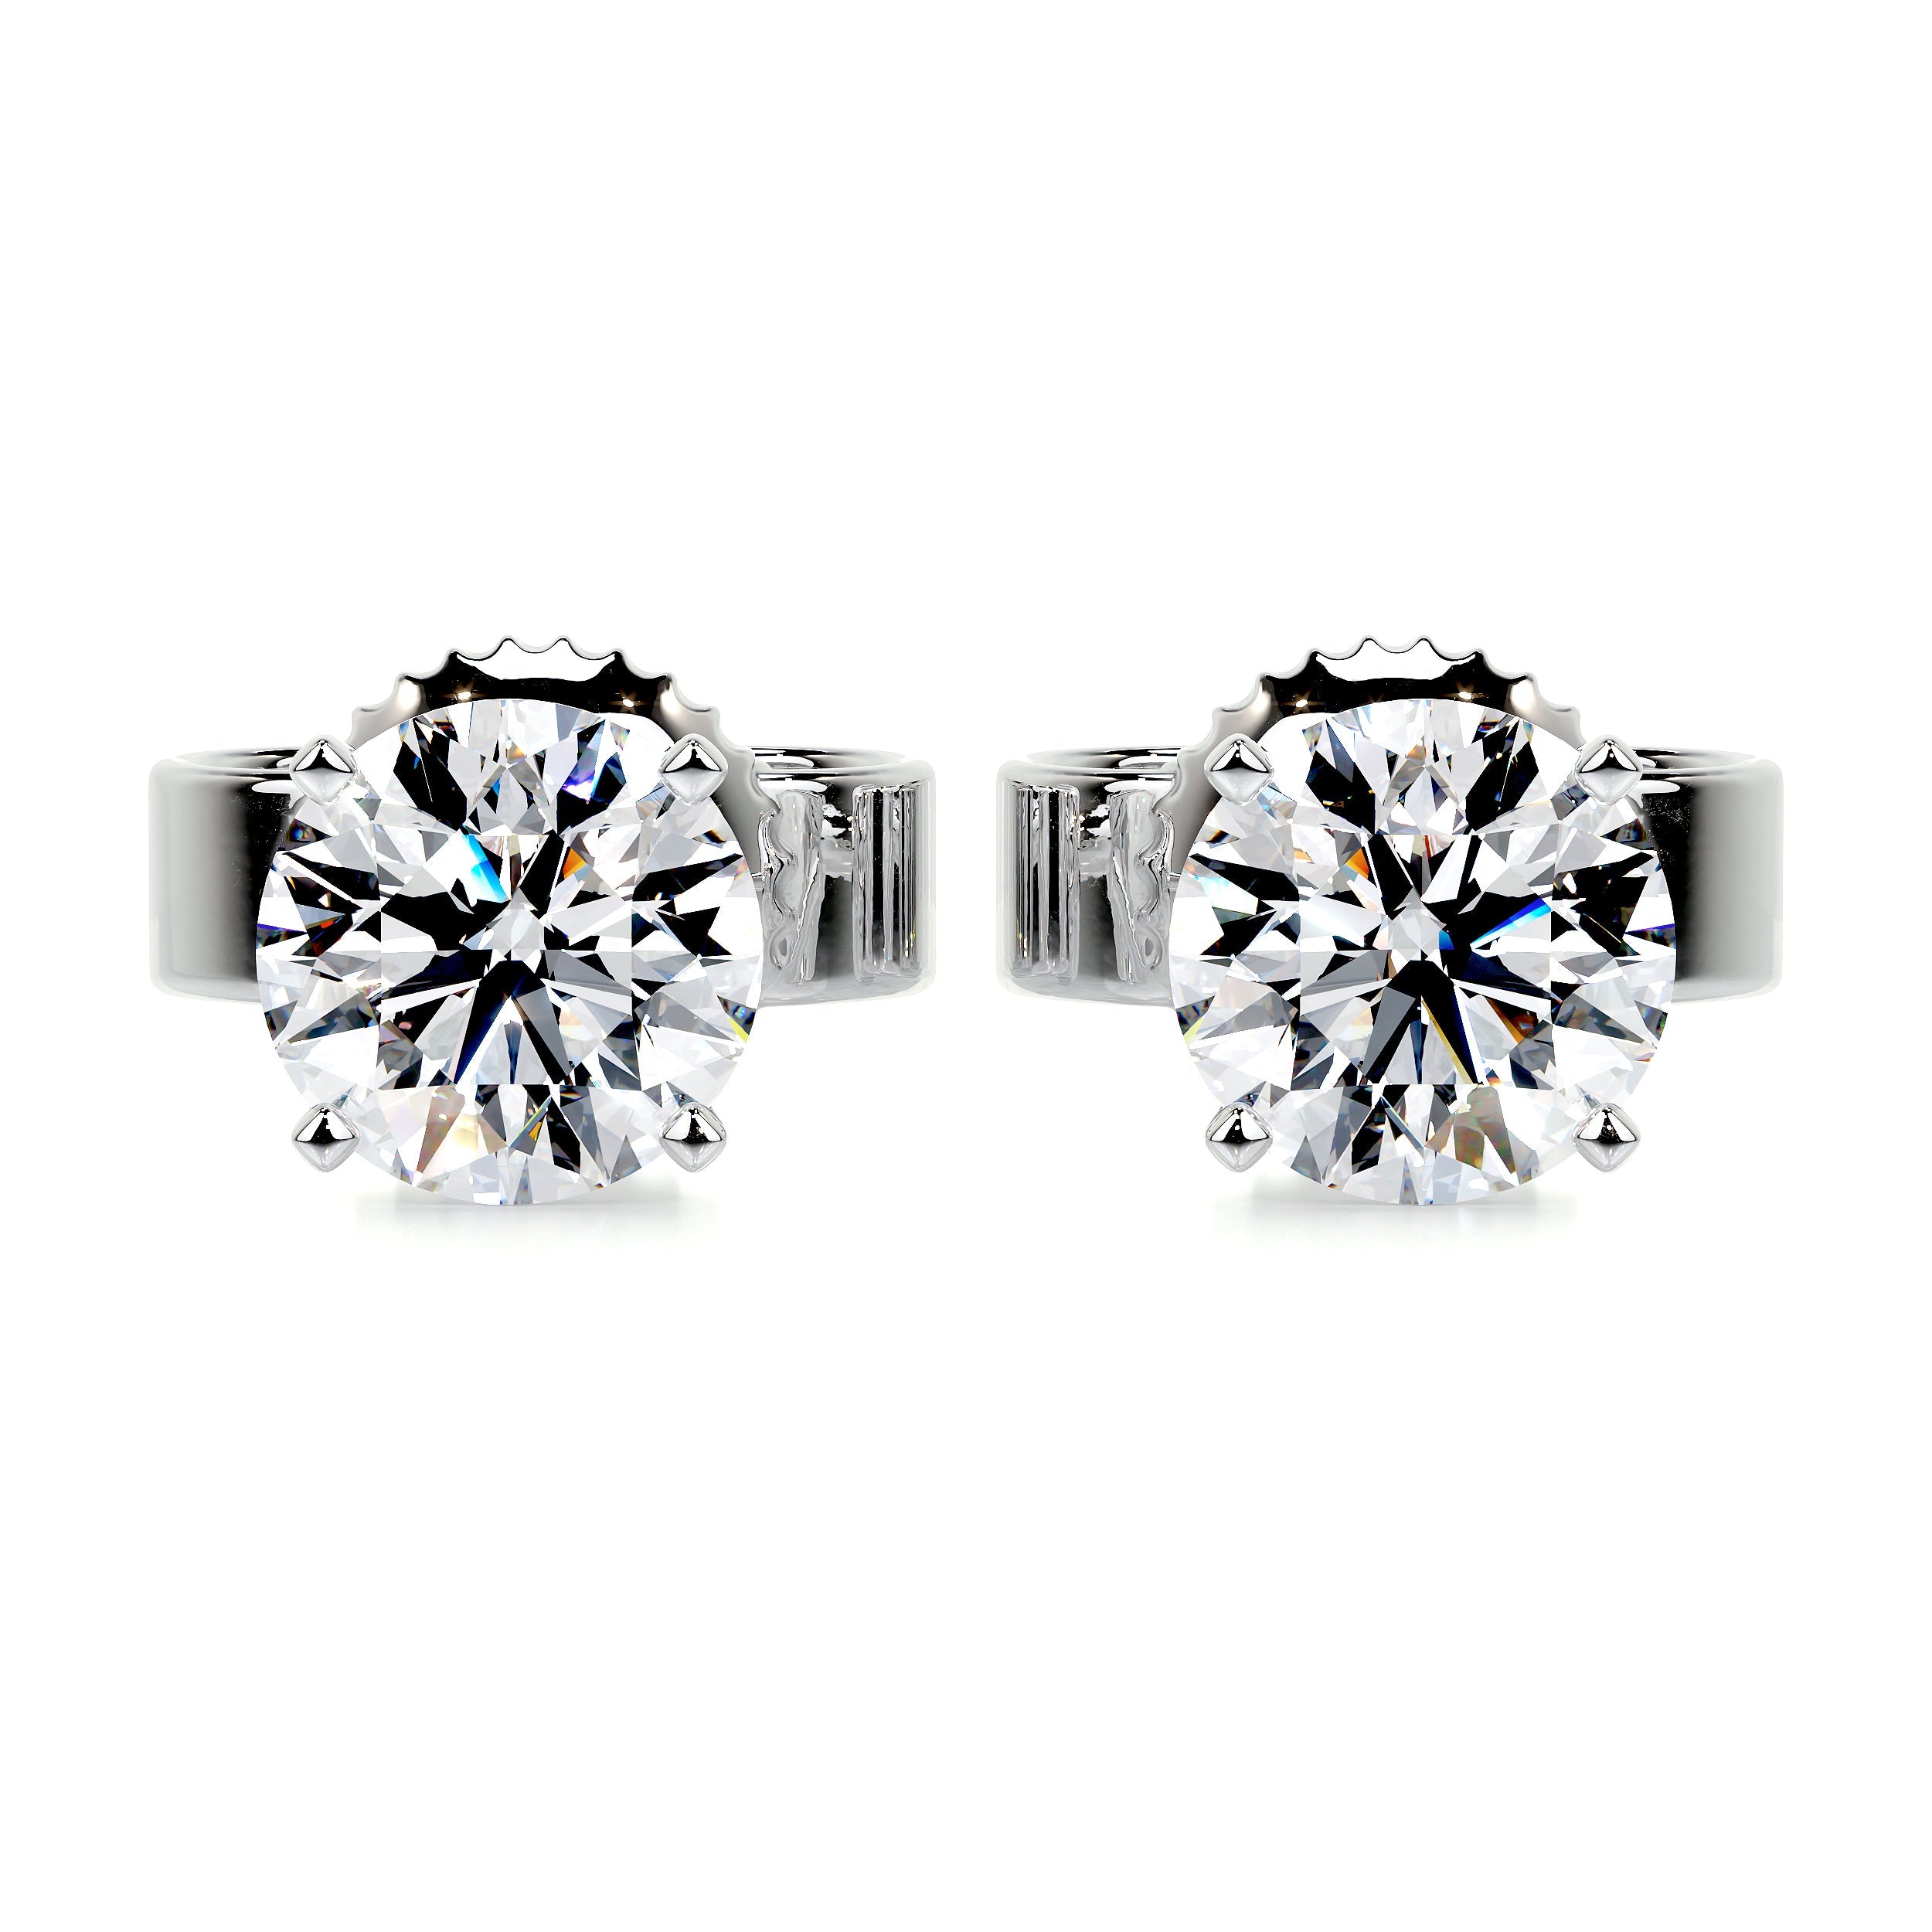 Allen Lab Grown Diamond Earrings   (3 Carat) -18K White Gold